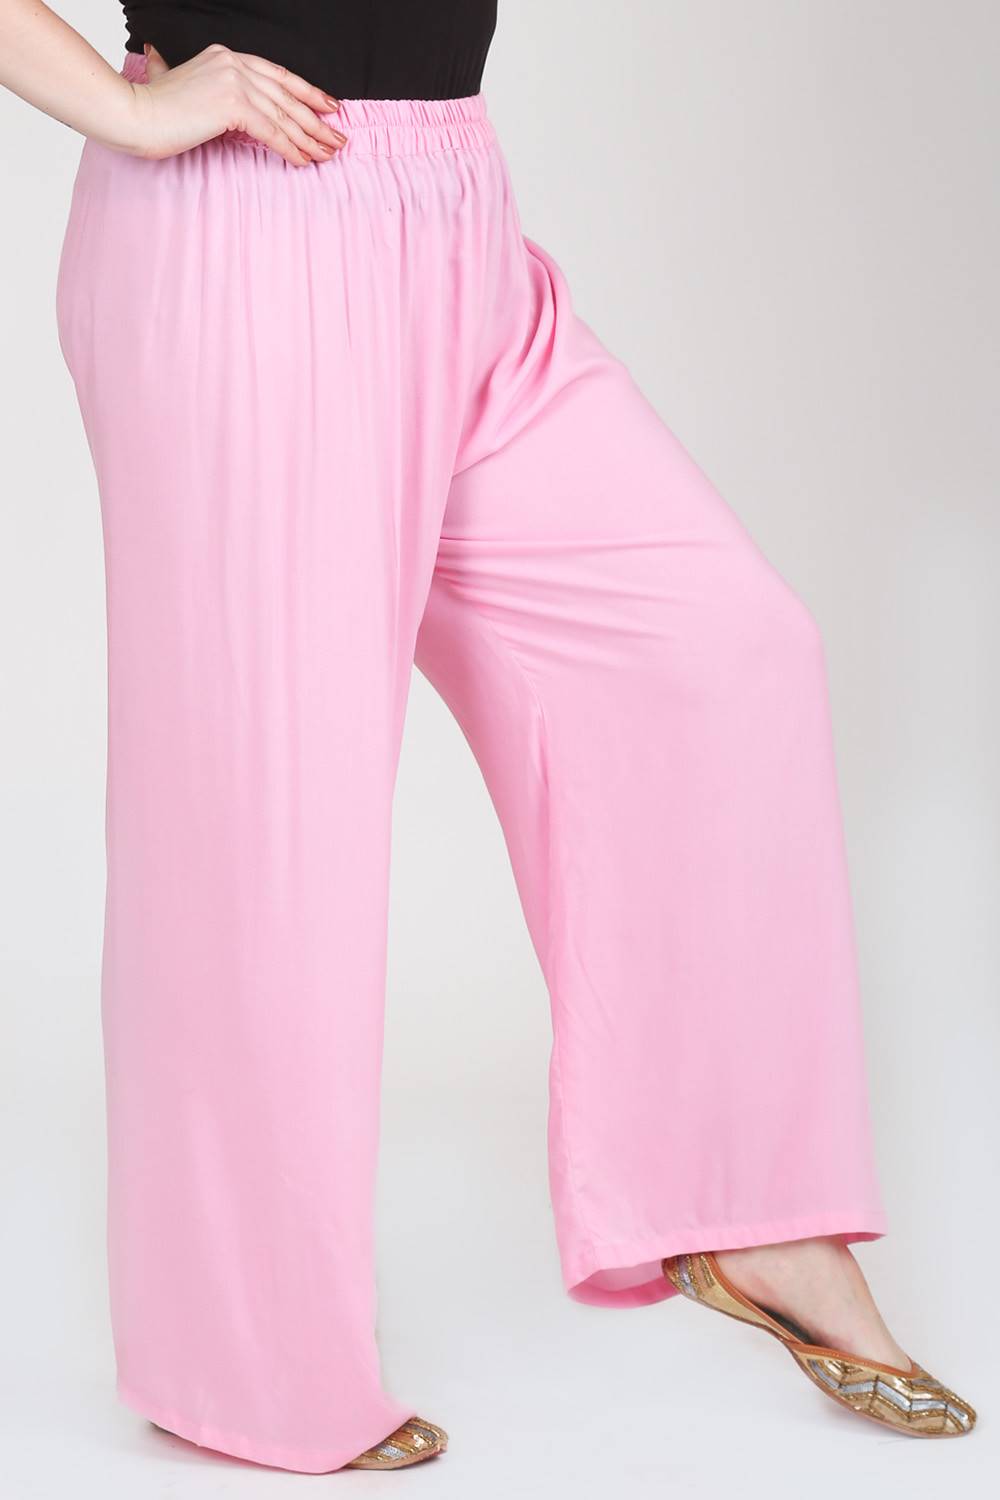 LASTINCH All Size's Solid Pink Palazzo Pants XXS-8XL